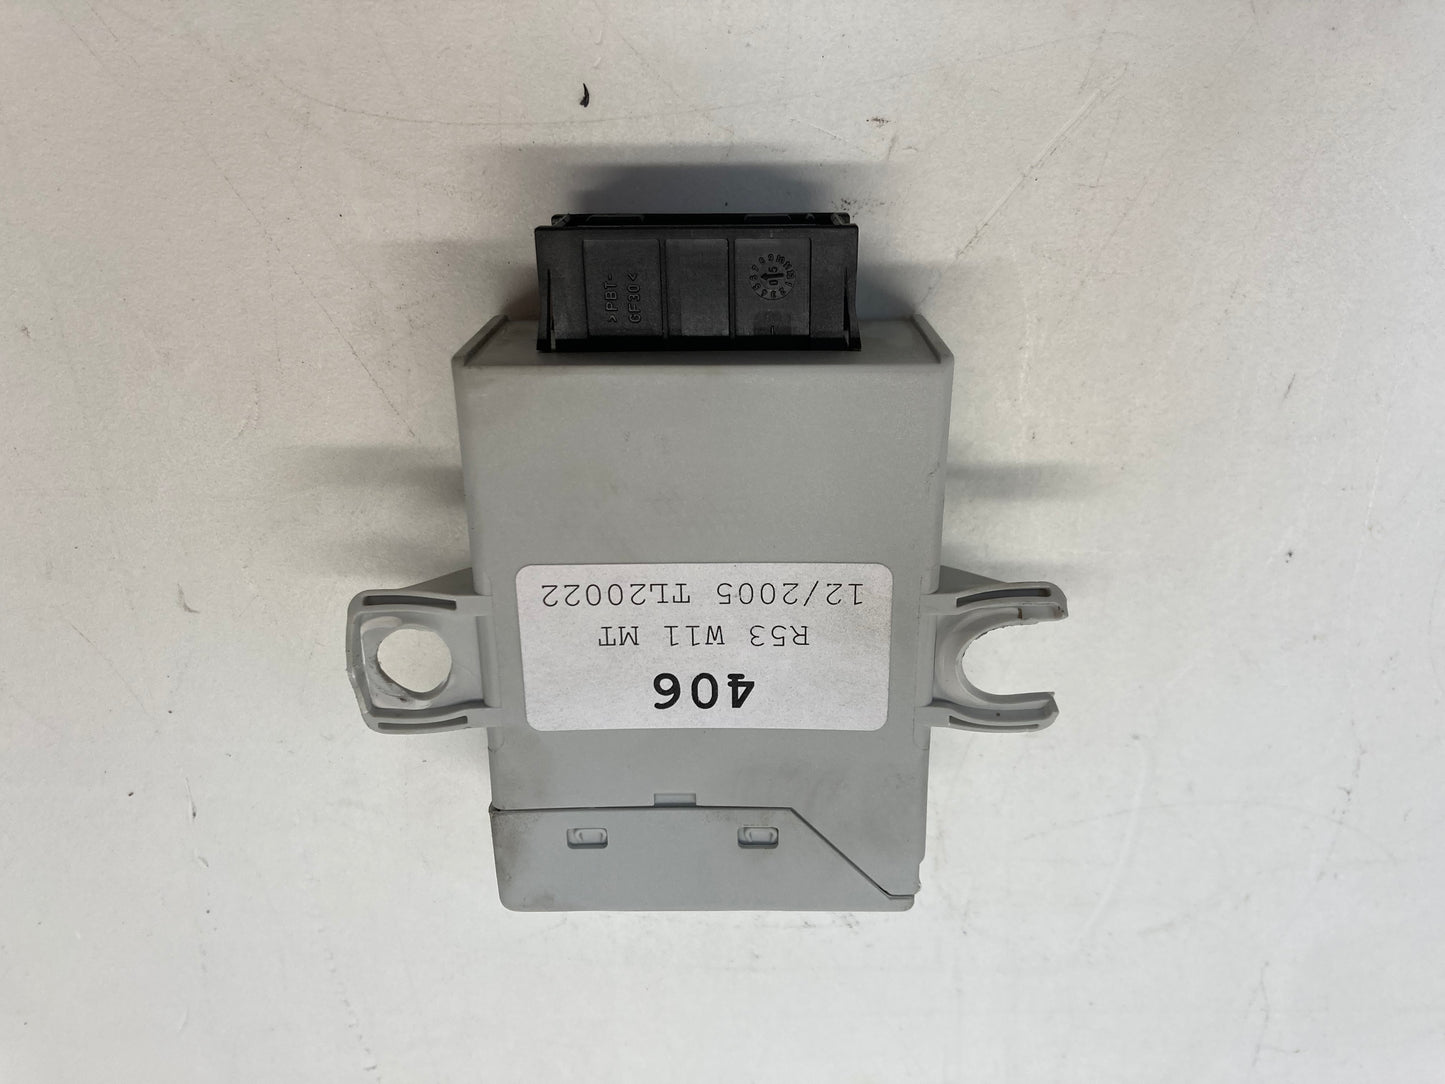 Mini Cooper S DME and Key Set Manual W11 12147557395 05-08 R52 R53 406